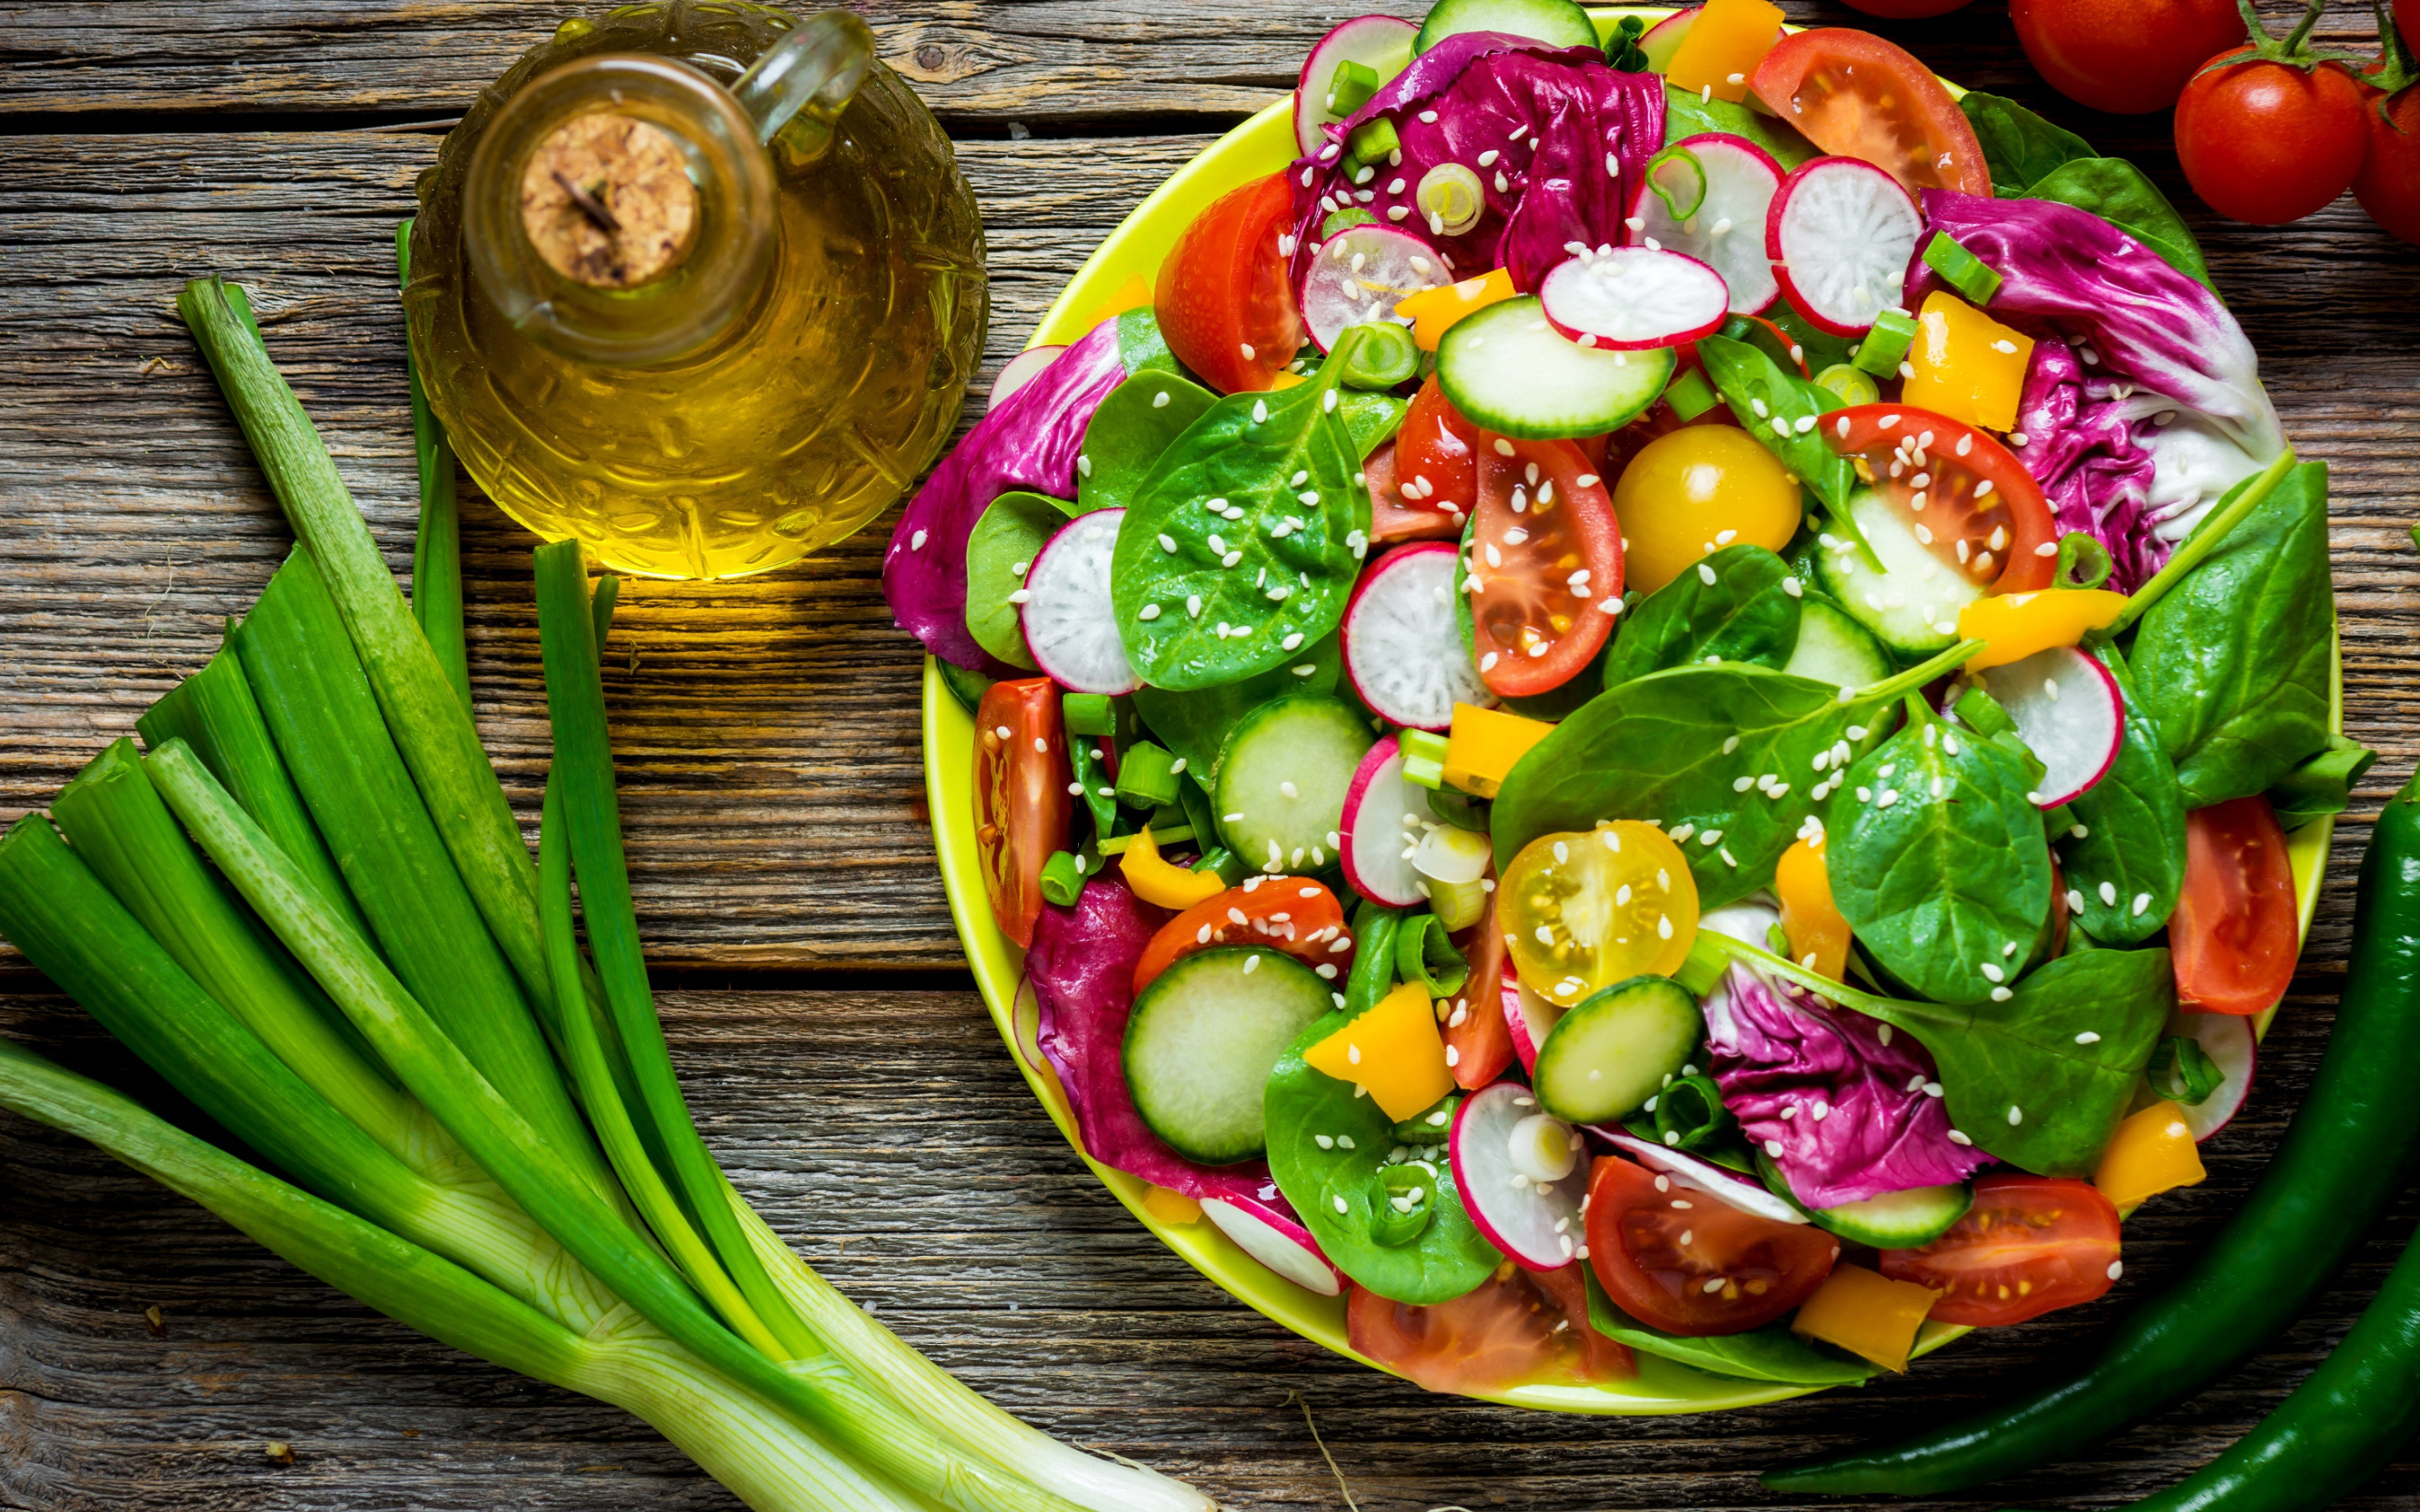 Colourful and crunchy fruit and vegetables can. Овощи и зелень. Овощи на столе. Овощной салат. Свежие овощи и зелень.